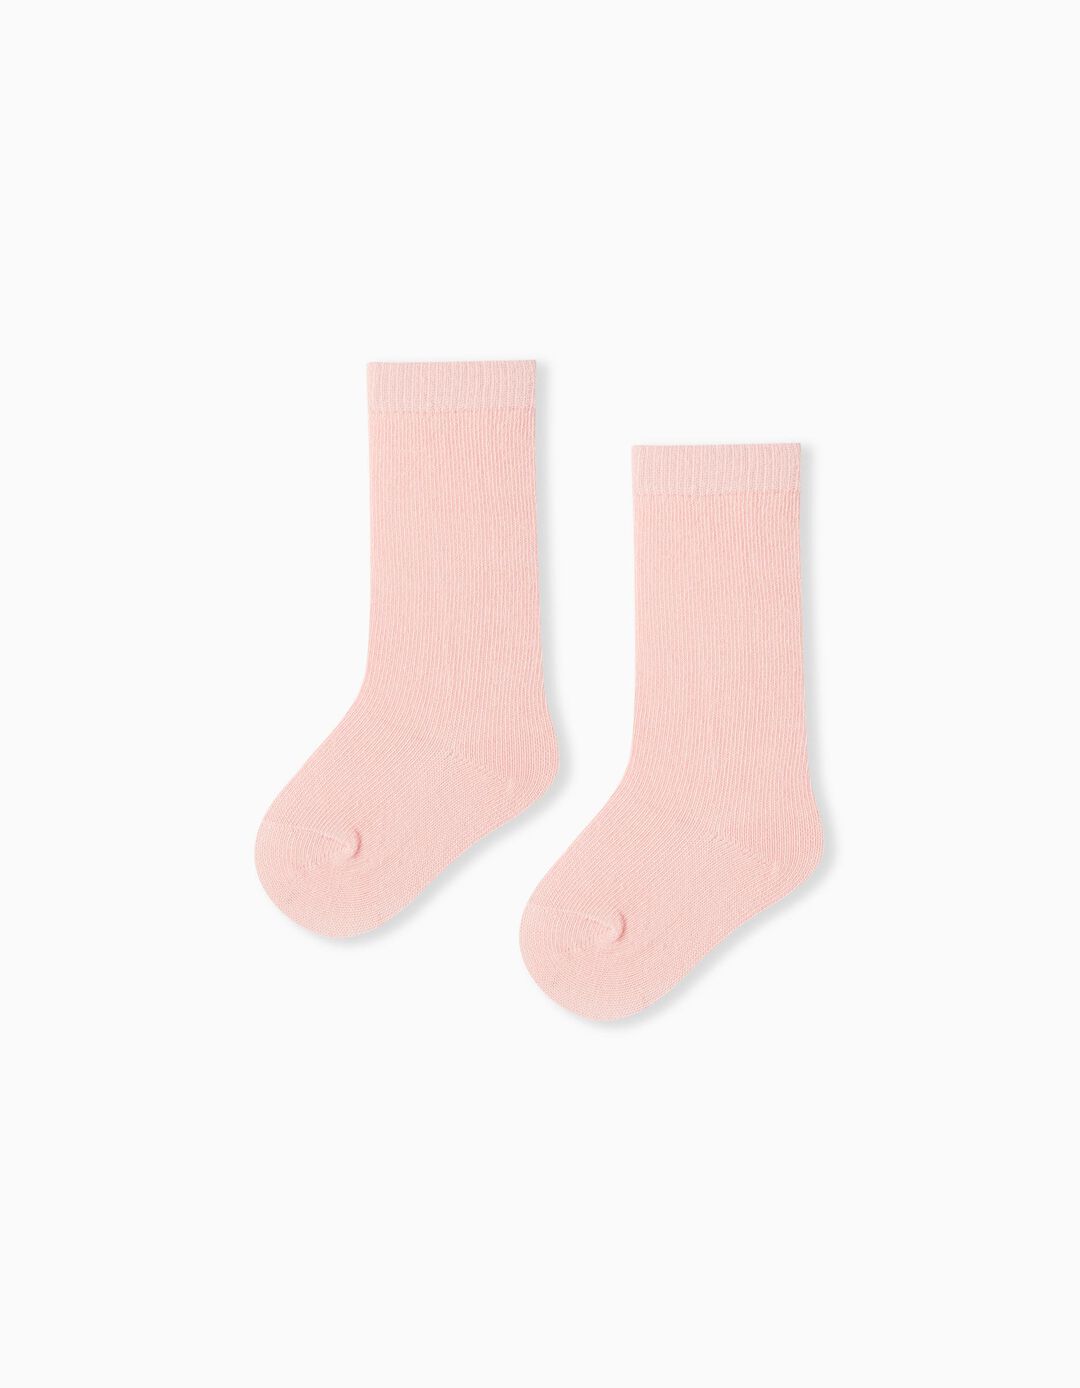 2 Pairs of High Socks Pack, Baby Girls, Light Pink